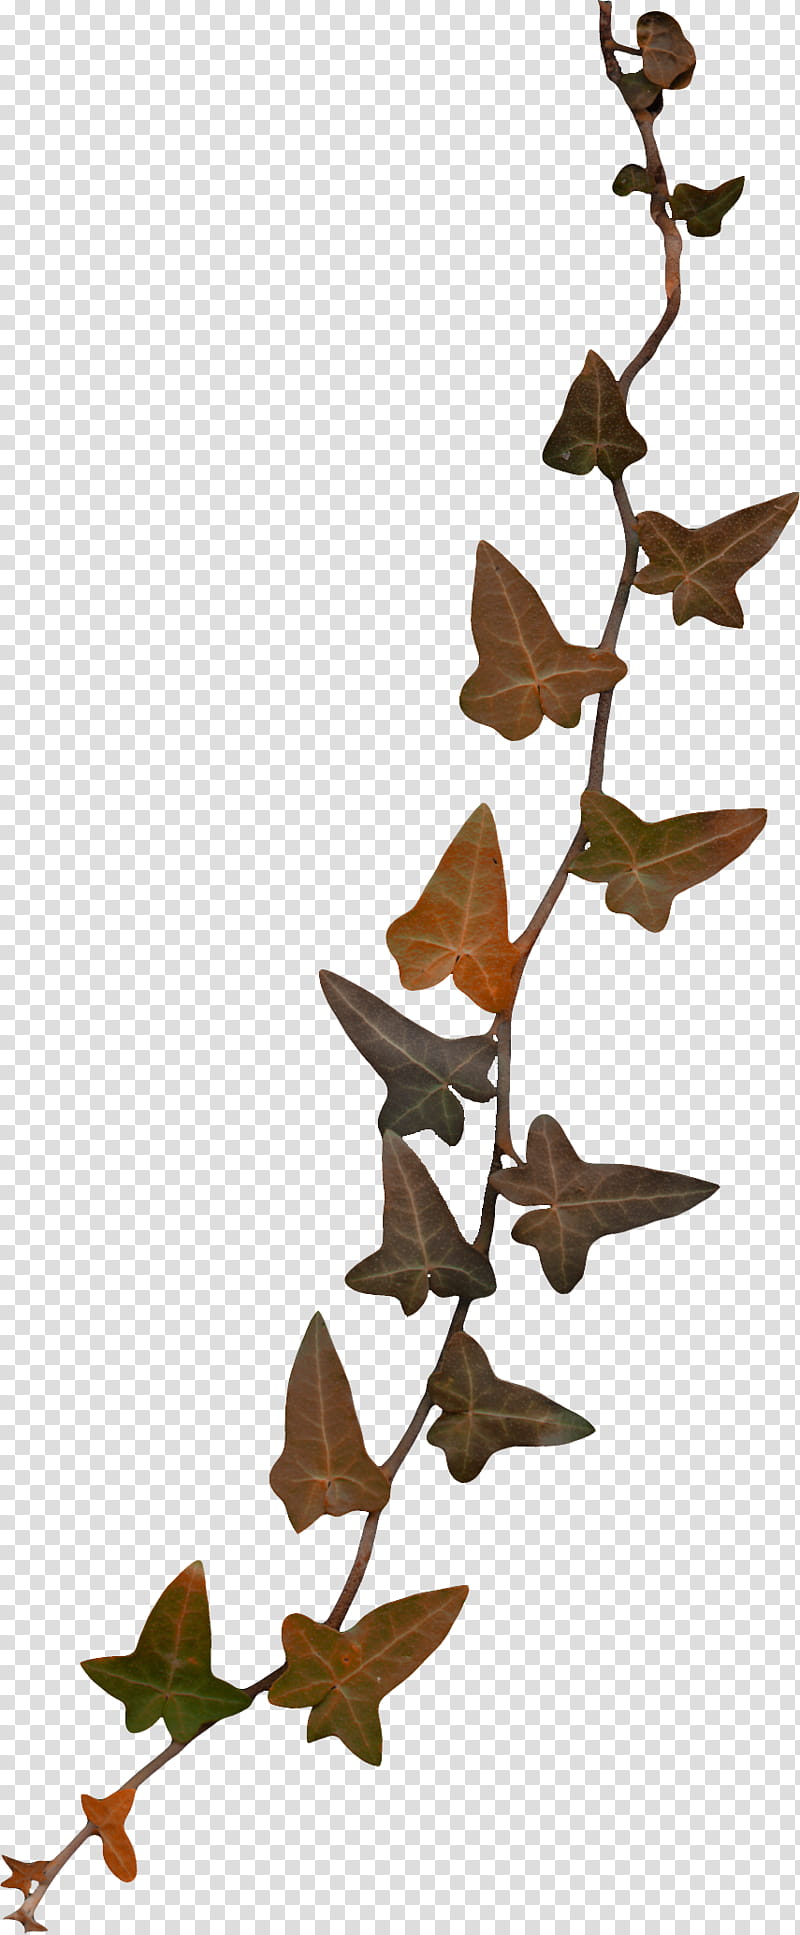 Autumn, brown leafed vine transparent background PNG clipart